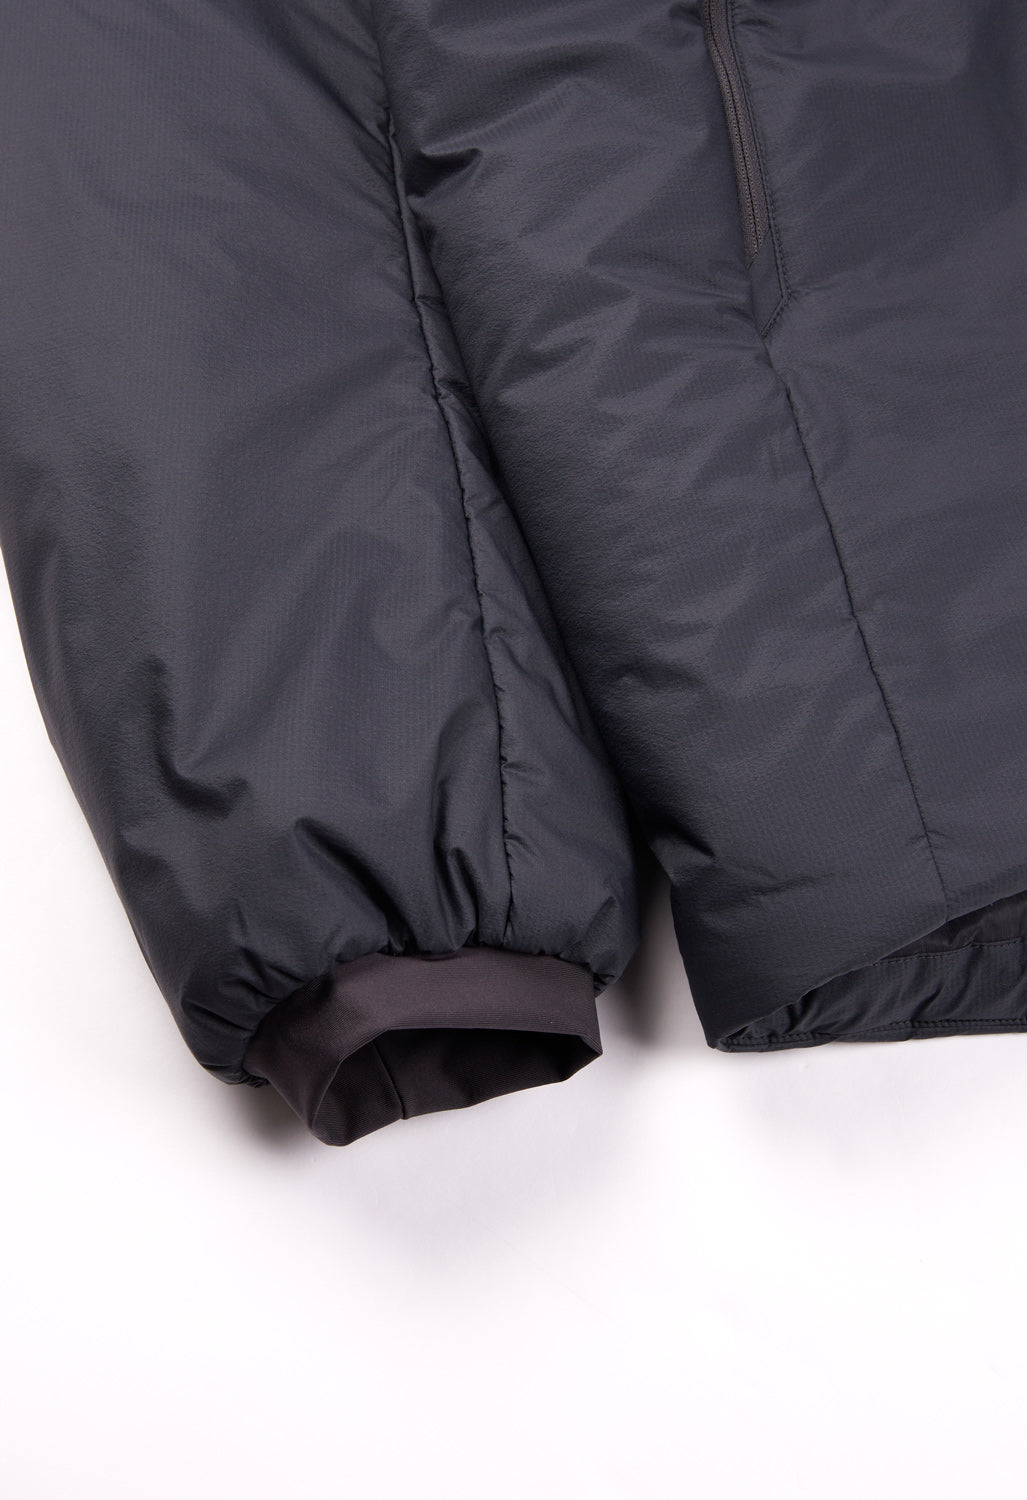 Arc'teryx Nuclei SV Men's Parka Jacket - Graphite – Outsiders Store UK